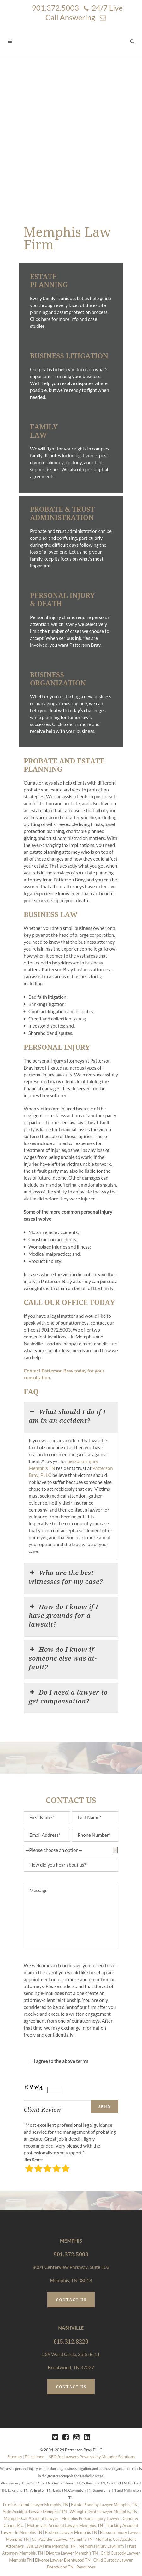 Wiseman Bray PLLC - Brentwood TN Lawyers